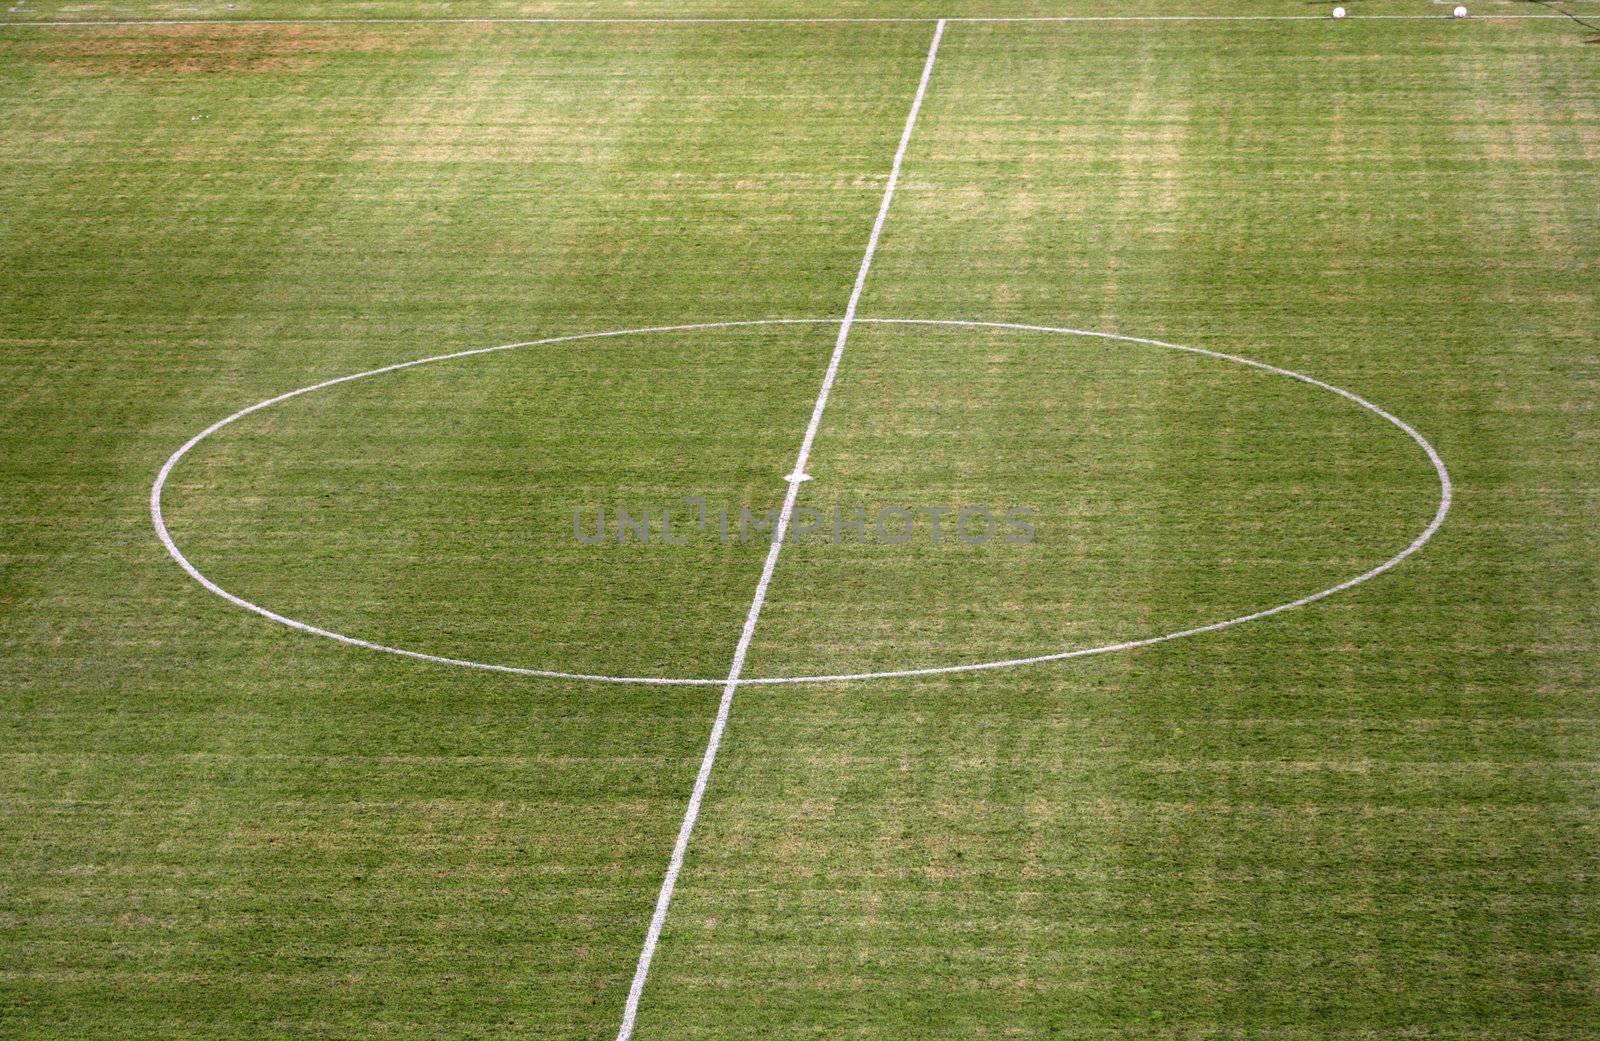 empty footbal / soccer pitch by keki